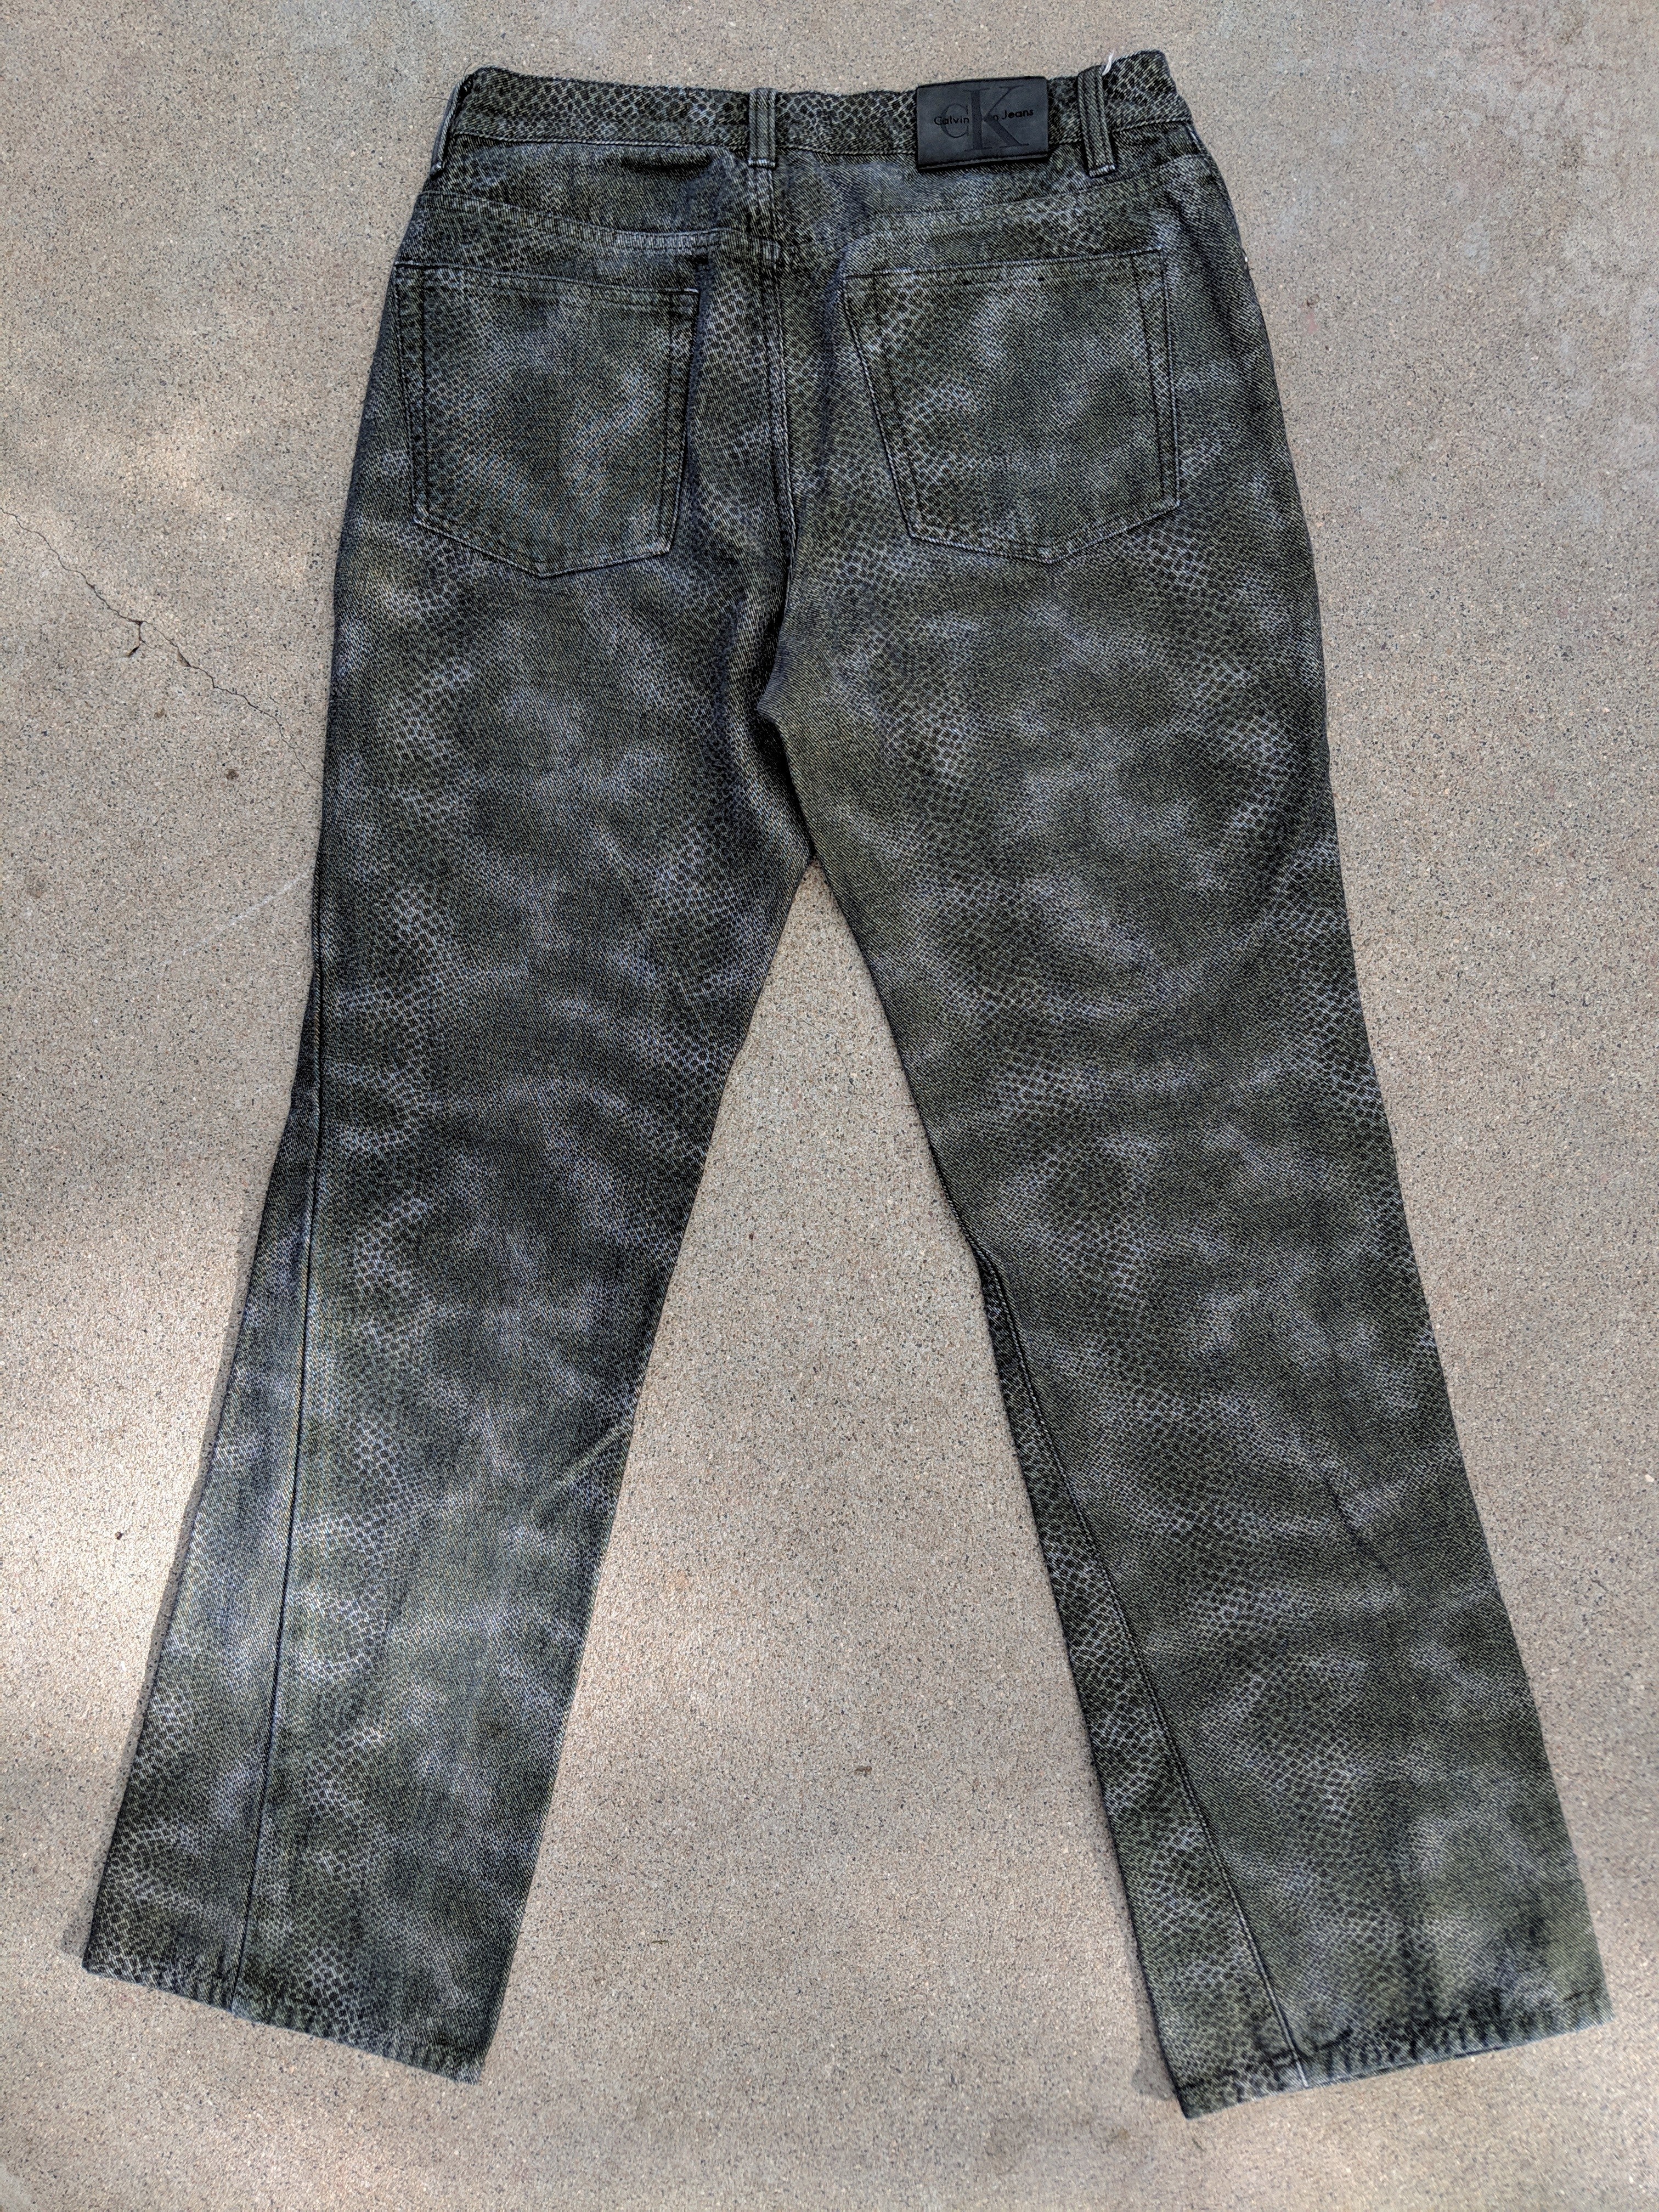 Snake Skin Print Jeans (10)